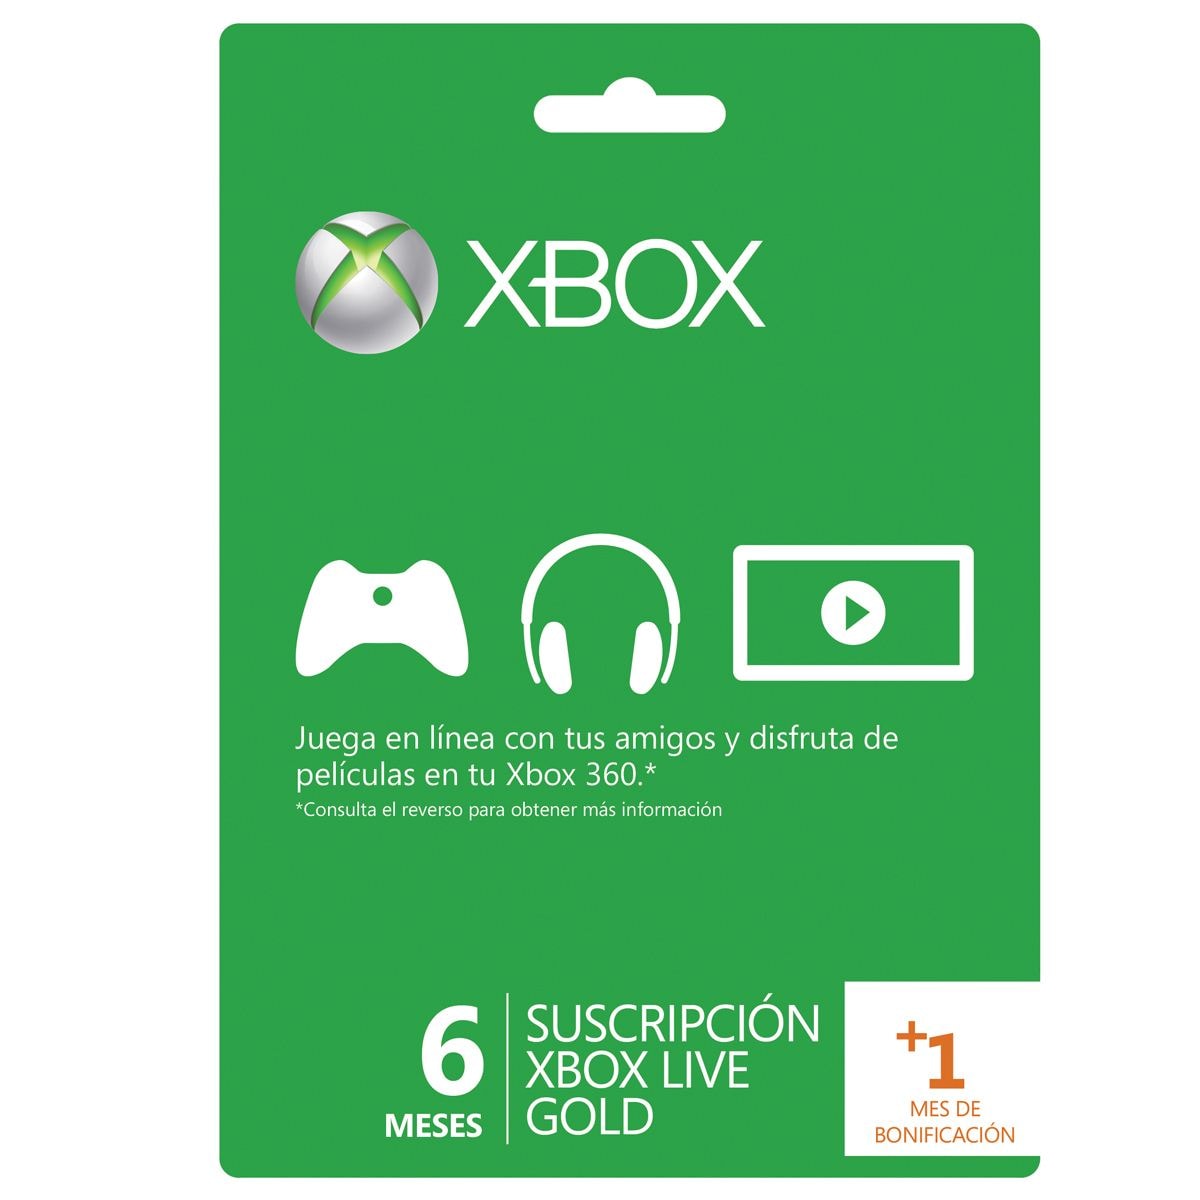 codo hospital Proporcional Tarjeta Suscripción 6 Meses Xbox Live Gold + 1 mes